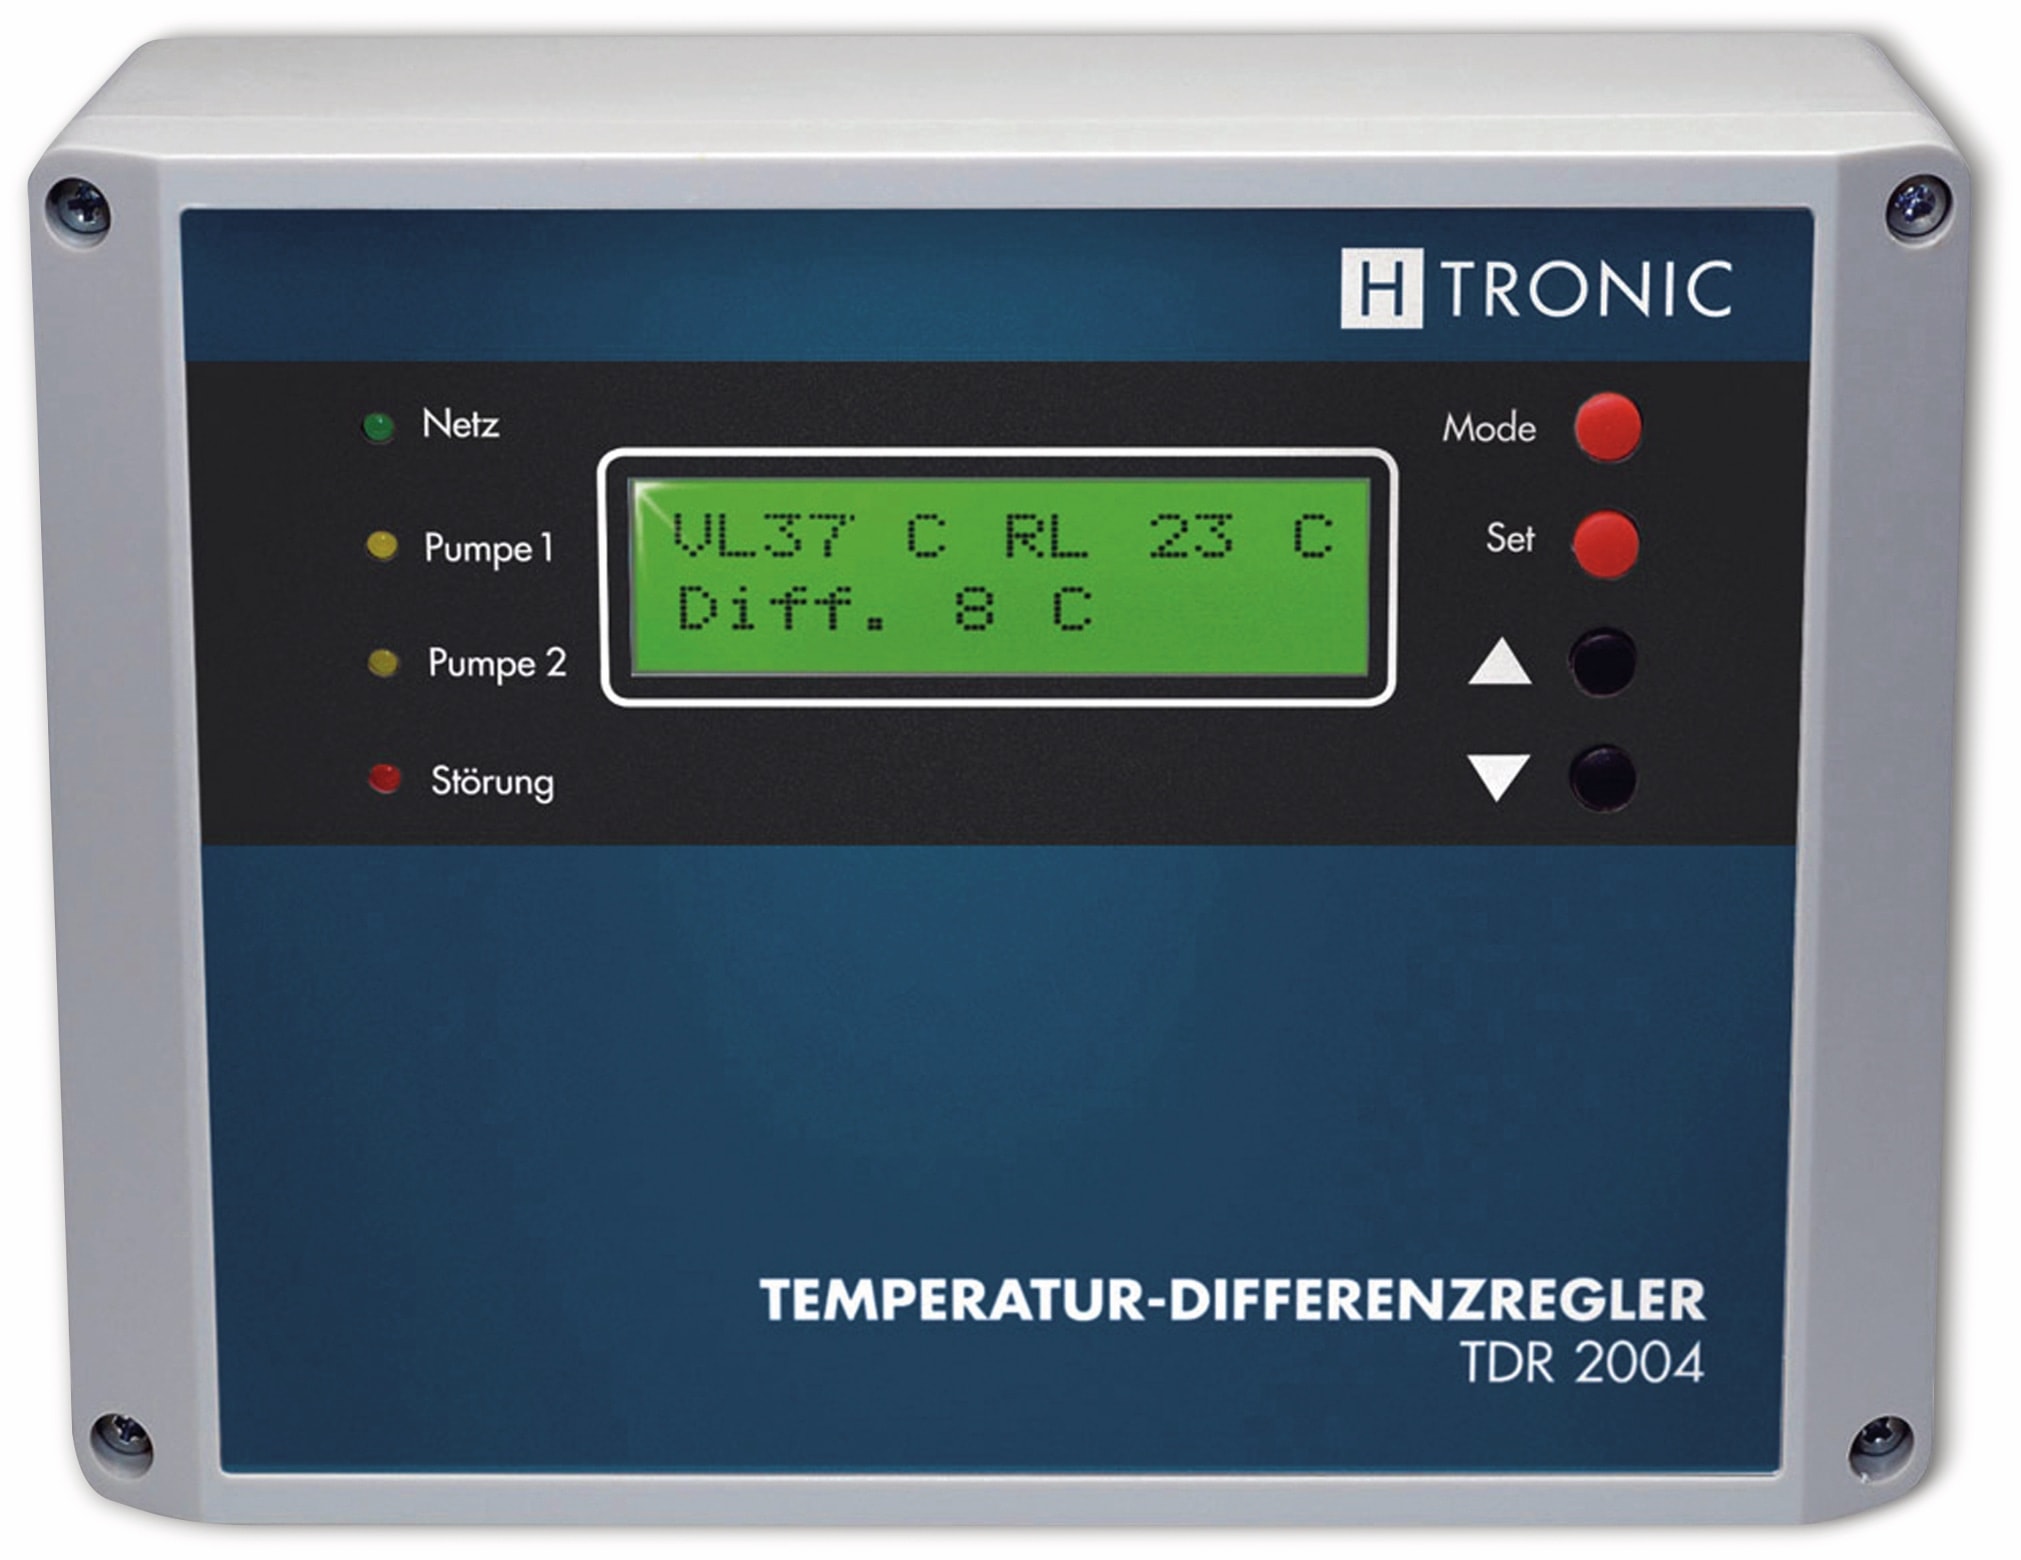 H-TRONIC Temperatur-Differenz-Regler TDR 2004 